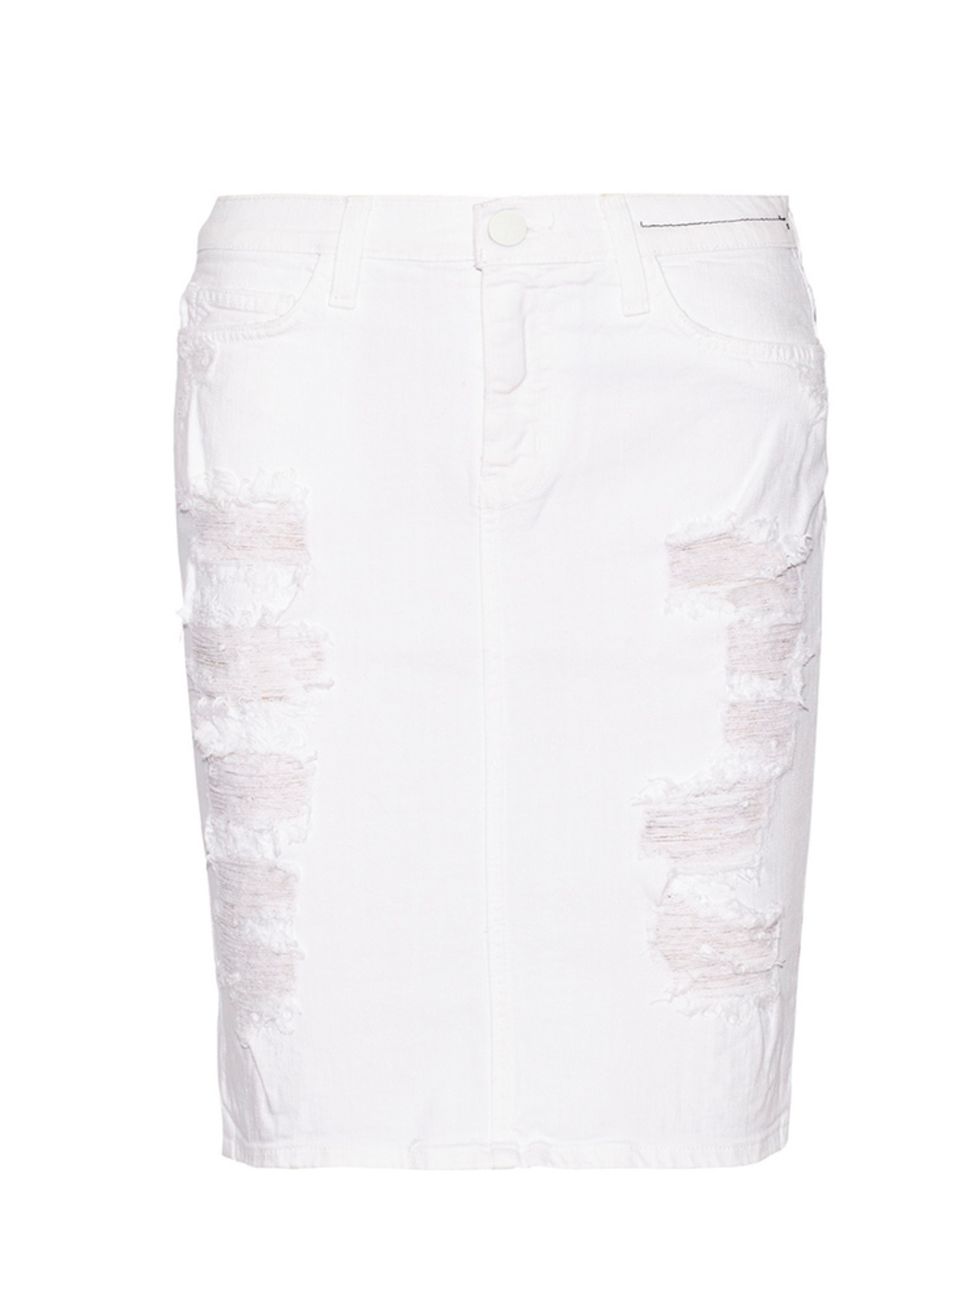 <p><a href="http://www.net-a-porter.com/product/519202/Current_Elliott/the-stiletto-distressed-stretch-denim-pencil-skirt" target="_blank">Current/Elliot</a> white distressed pencil skirt, £200</p>